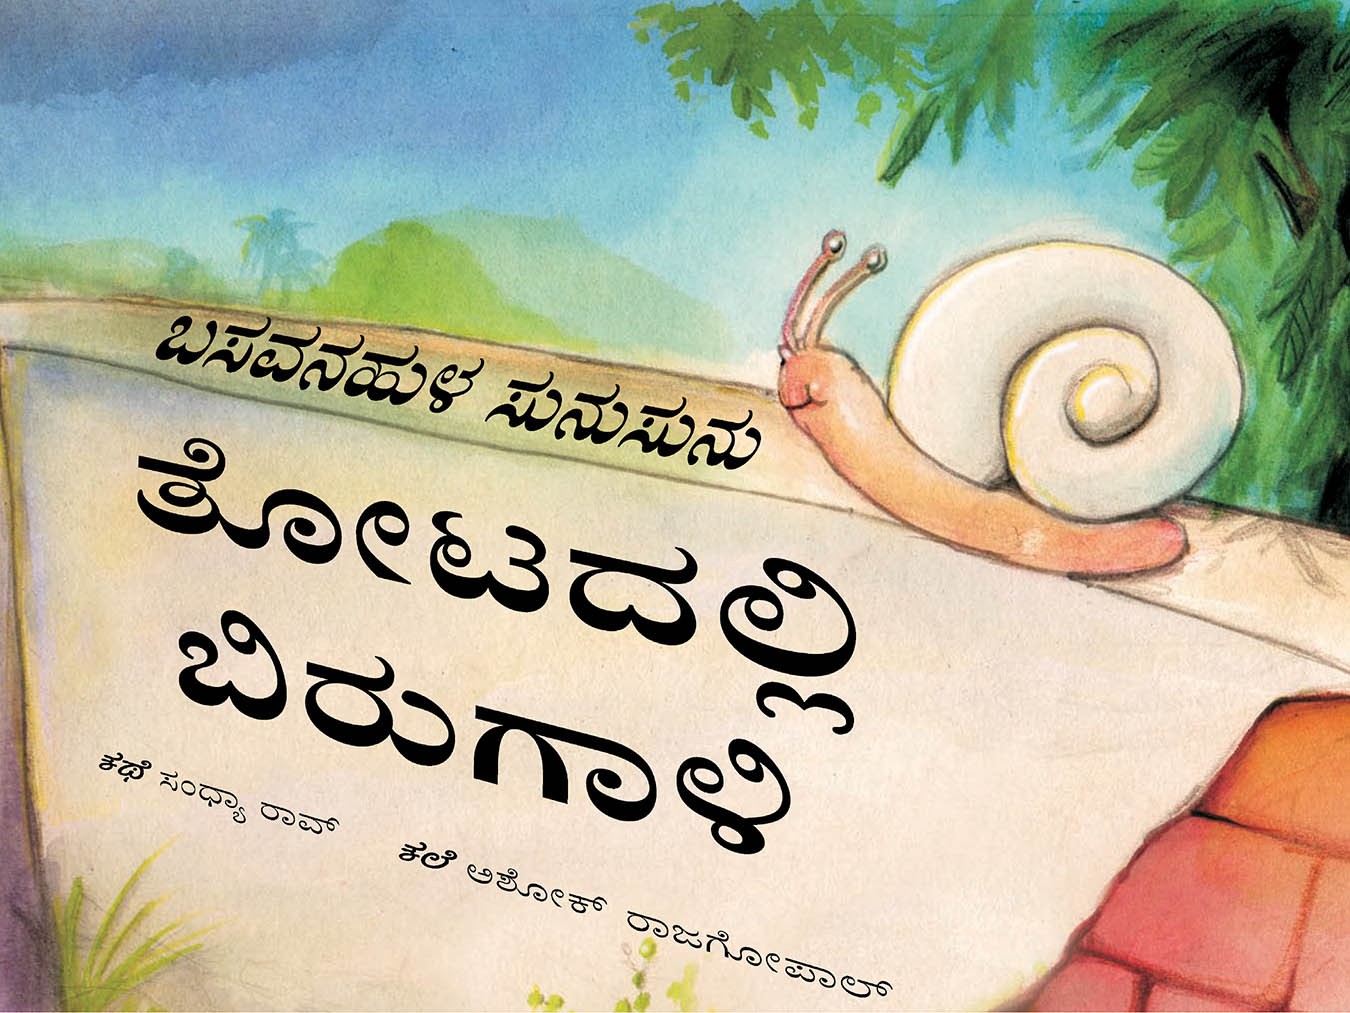 Sunu-sunu Snail: Storm in the Garden/Basavanahula Sunusunu: Thotadalli Birugaali (Kannada)